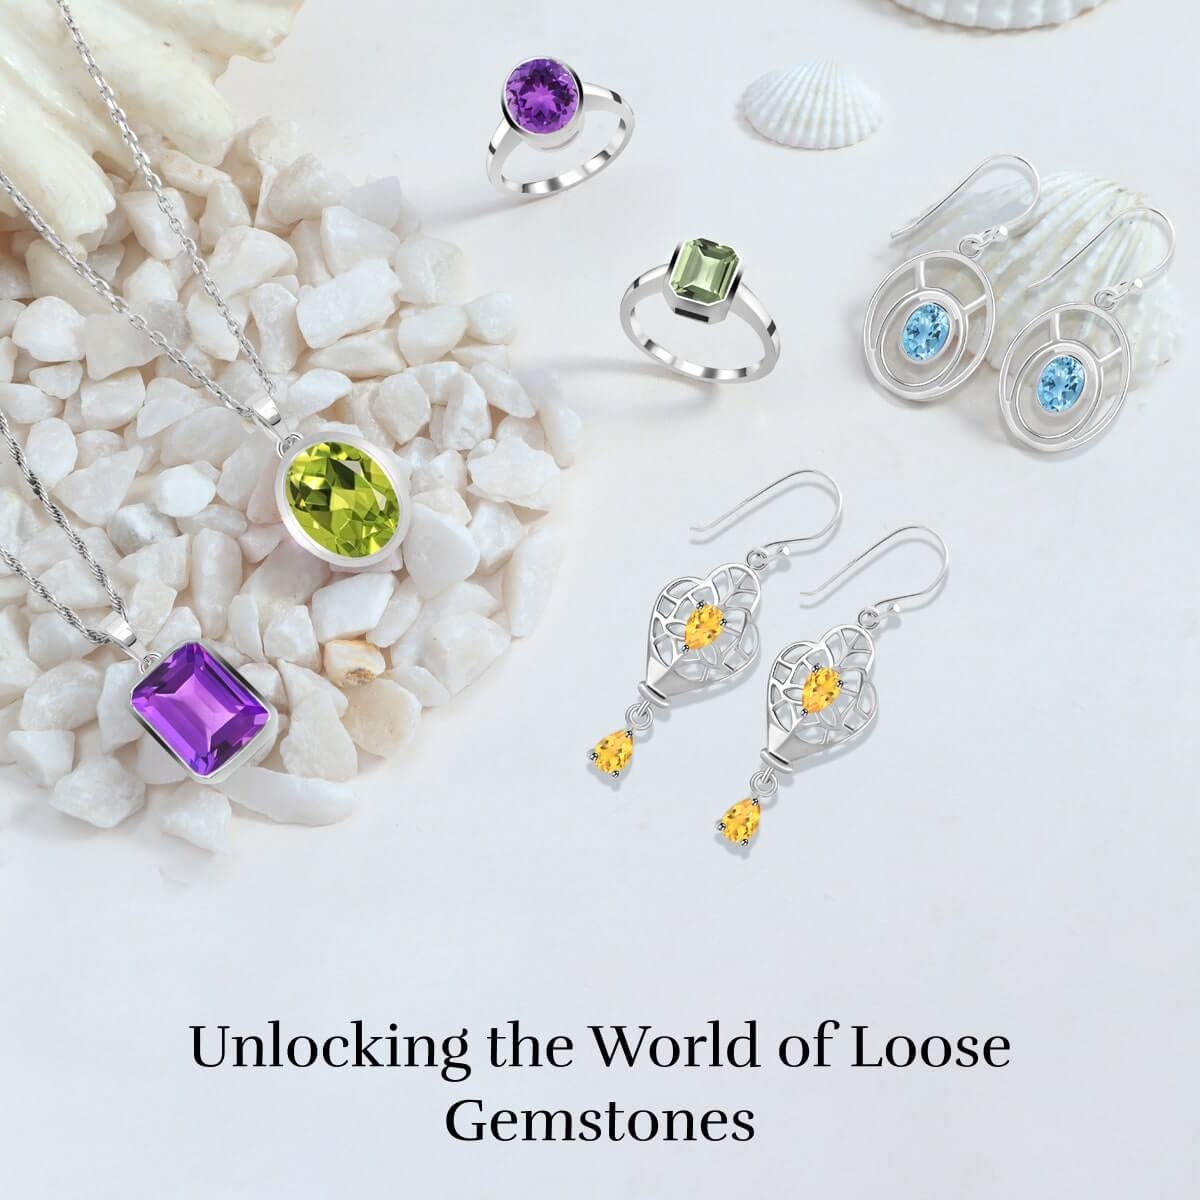 List of Loose Gemstones: Color, Properties, Healing Benefits and Value